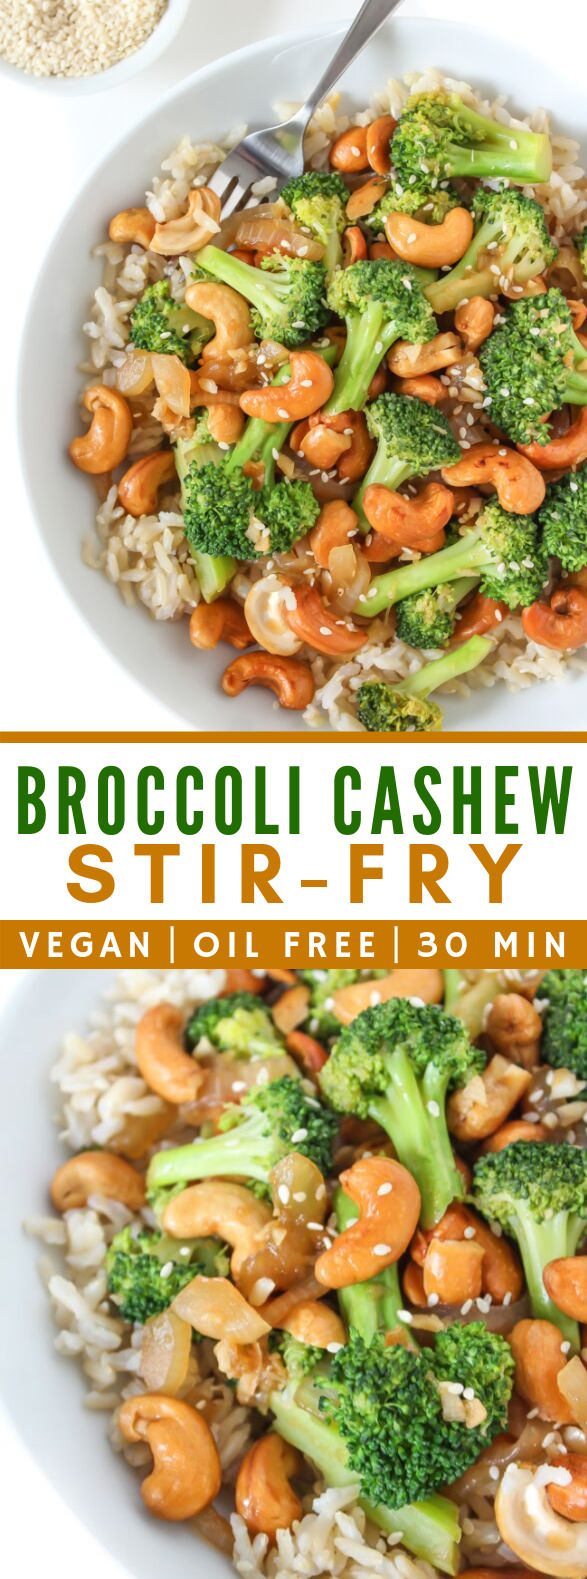 BROCCOLI CASHEW STIR-FRY #vegetarian #oilfree